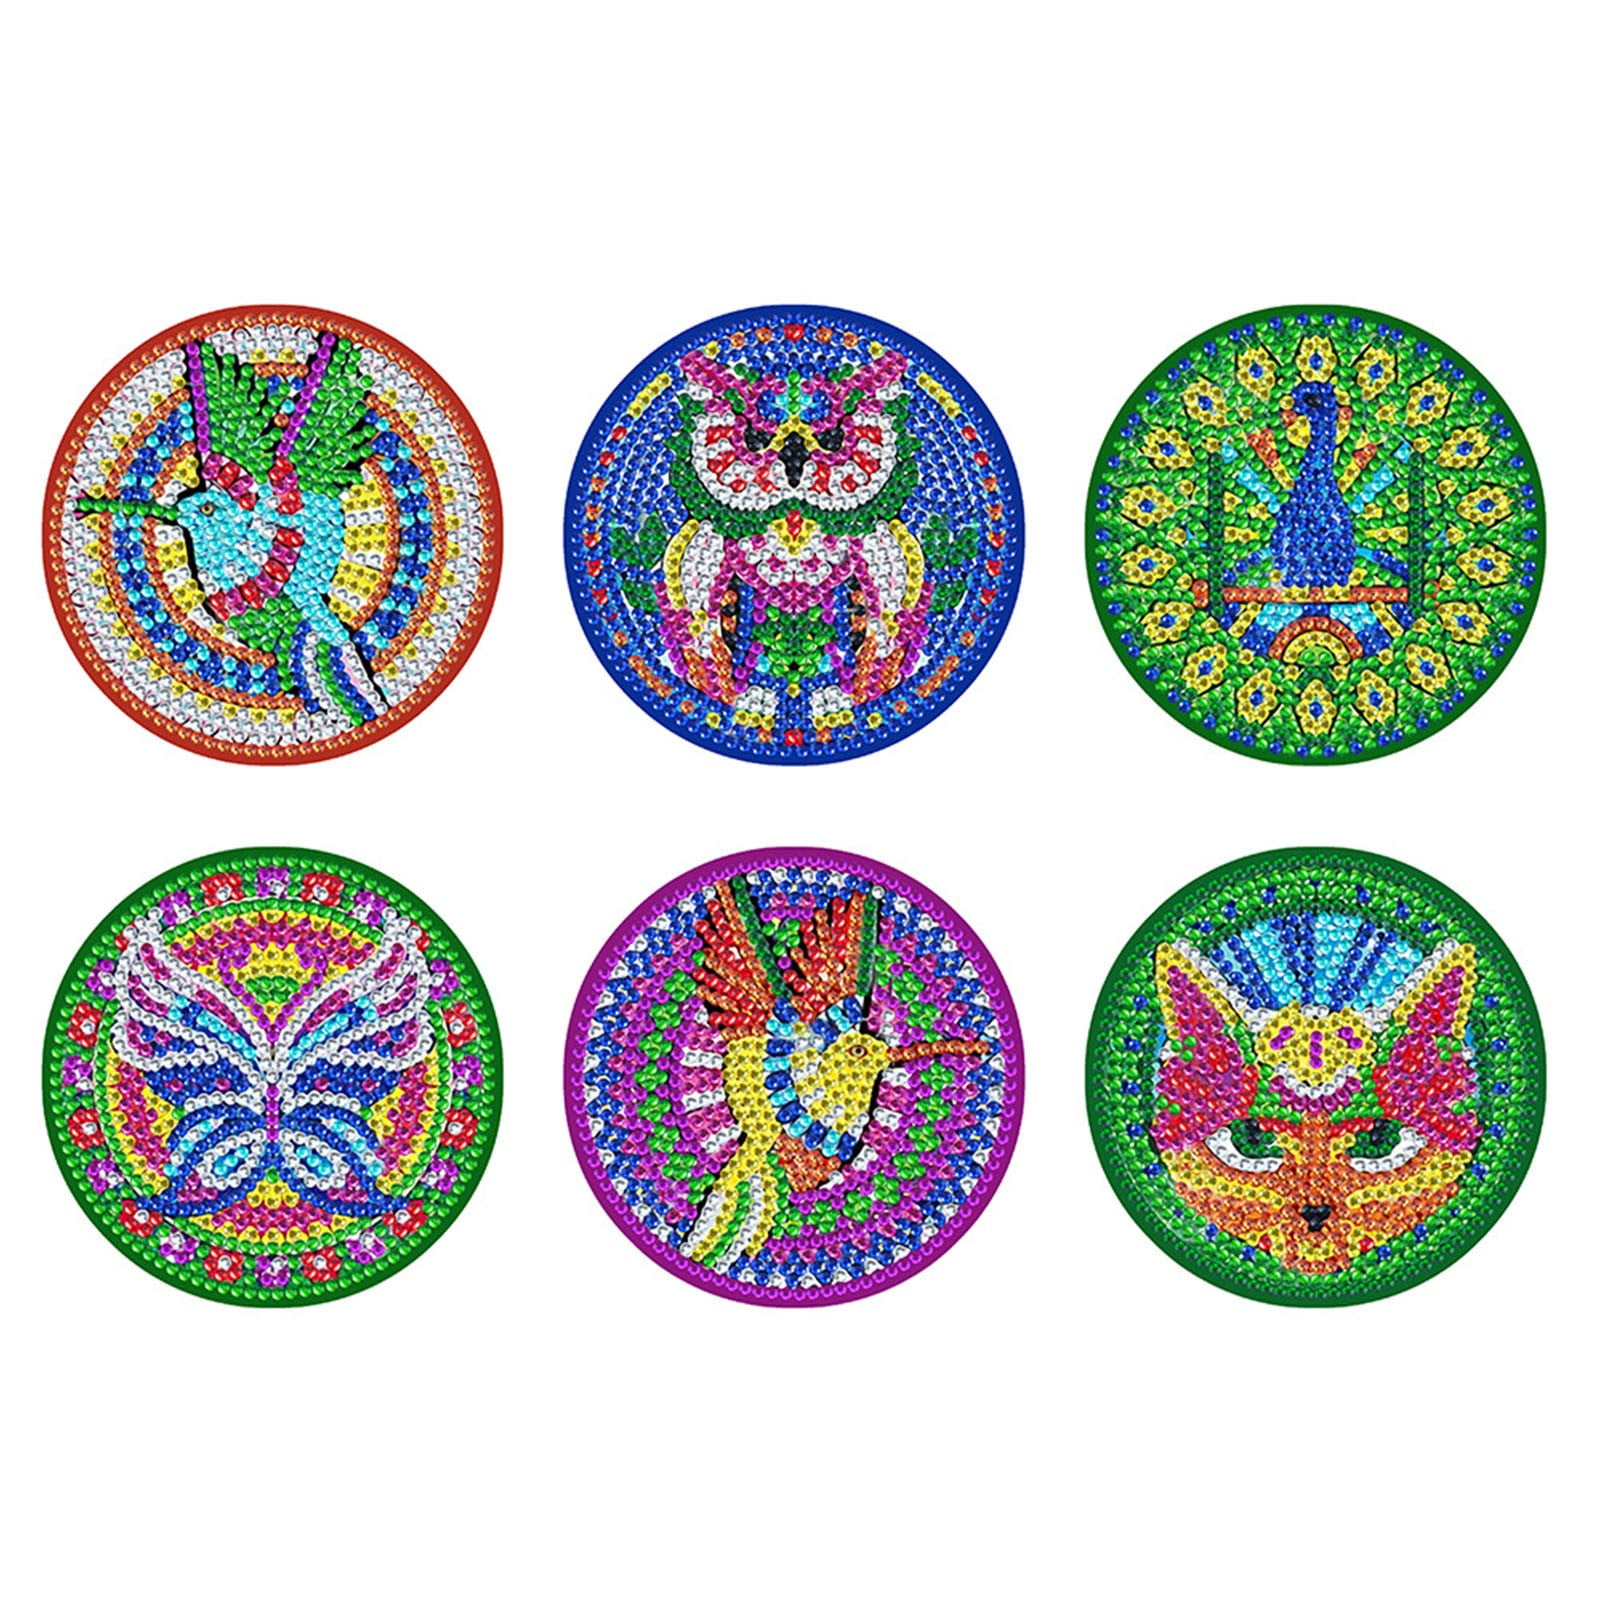 HOURFUN 6pcs Diamond Painting Coasters with Holder DIY Mandala Coasters Diamond Painting Kits Small Diamond Painting Art Kits Supplies for Beginners